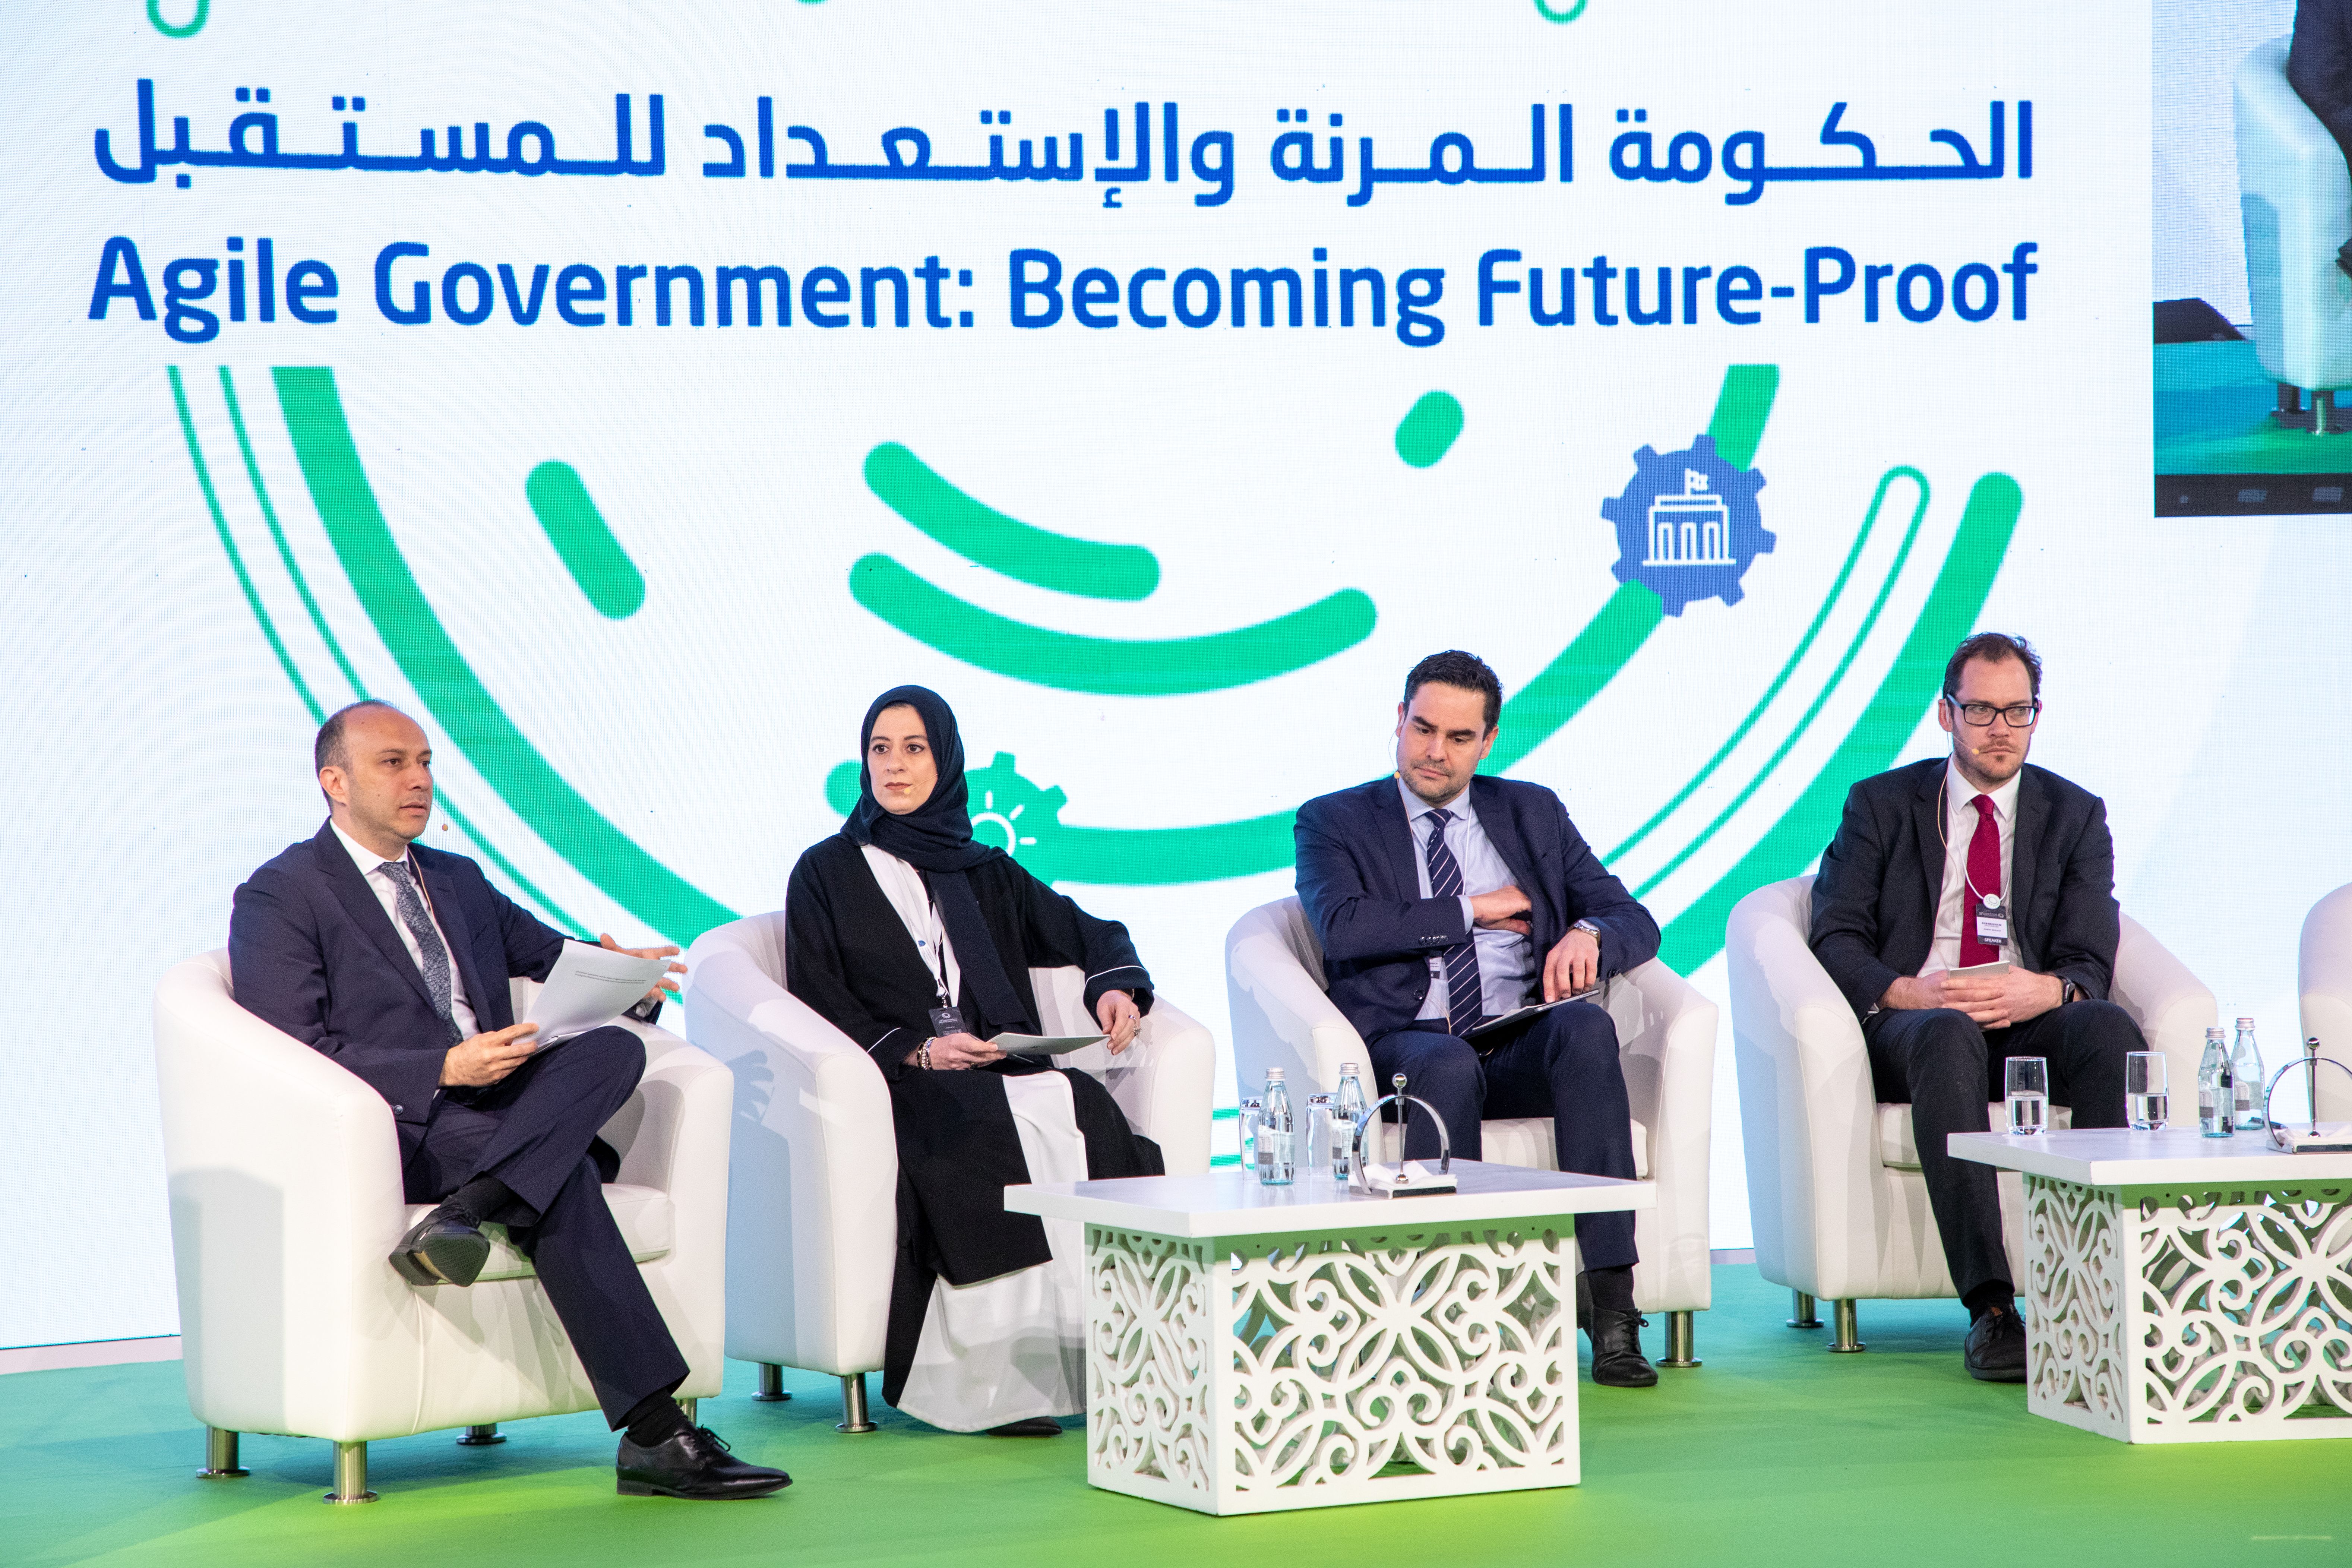 UAE Public Policy Forum 2020